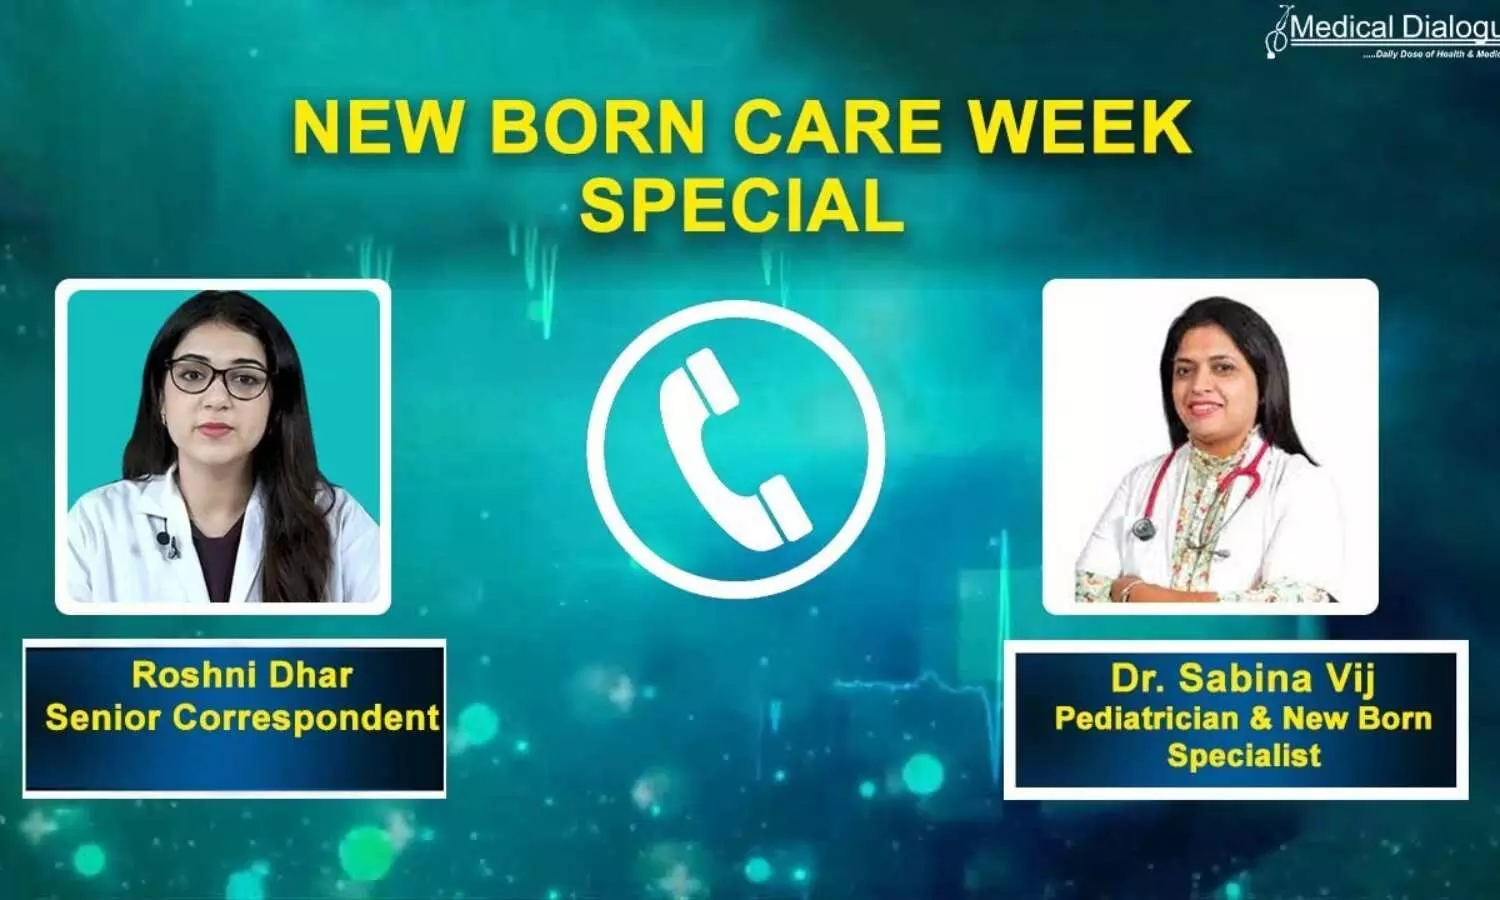 New born care week special - Dr Sabina Vij